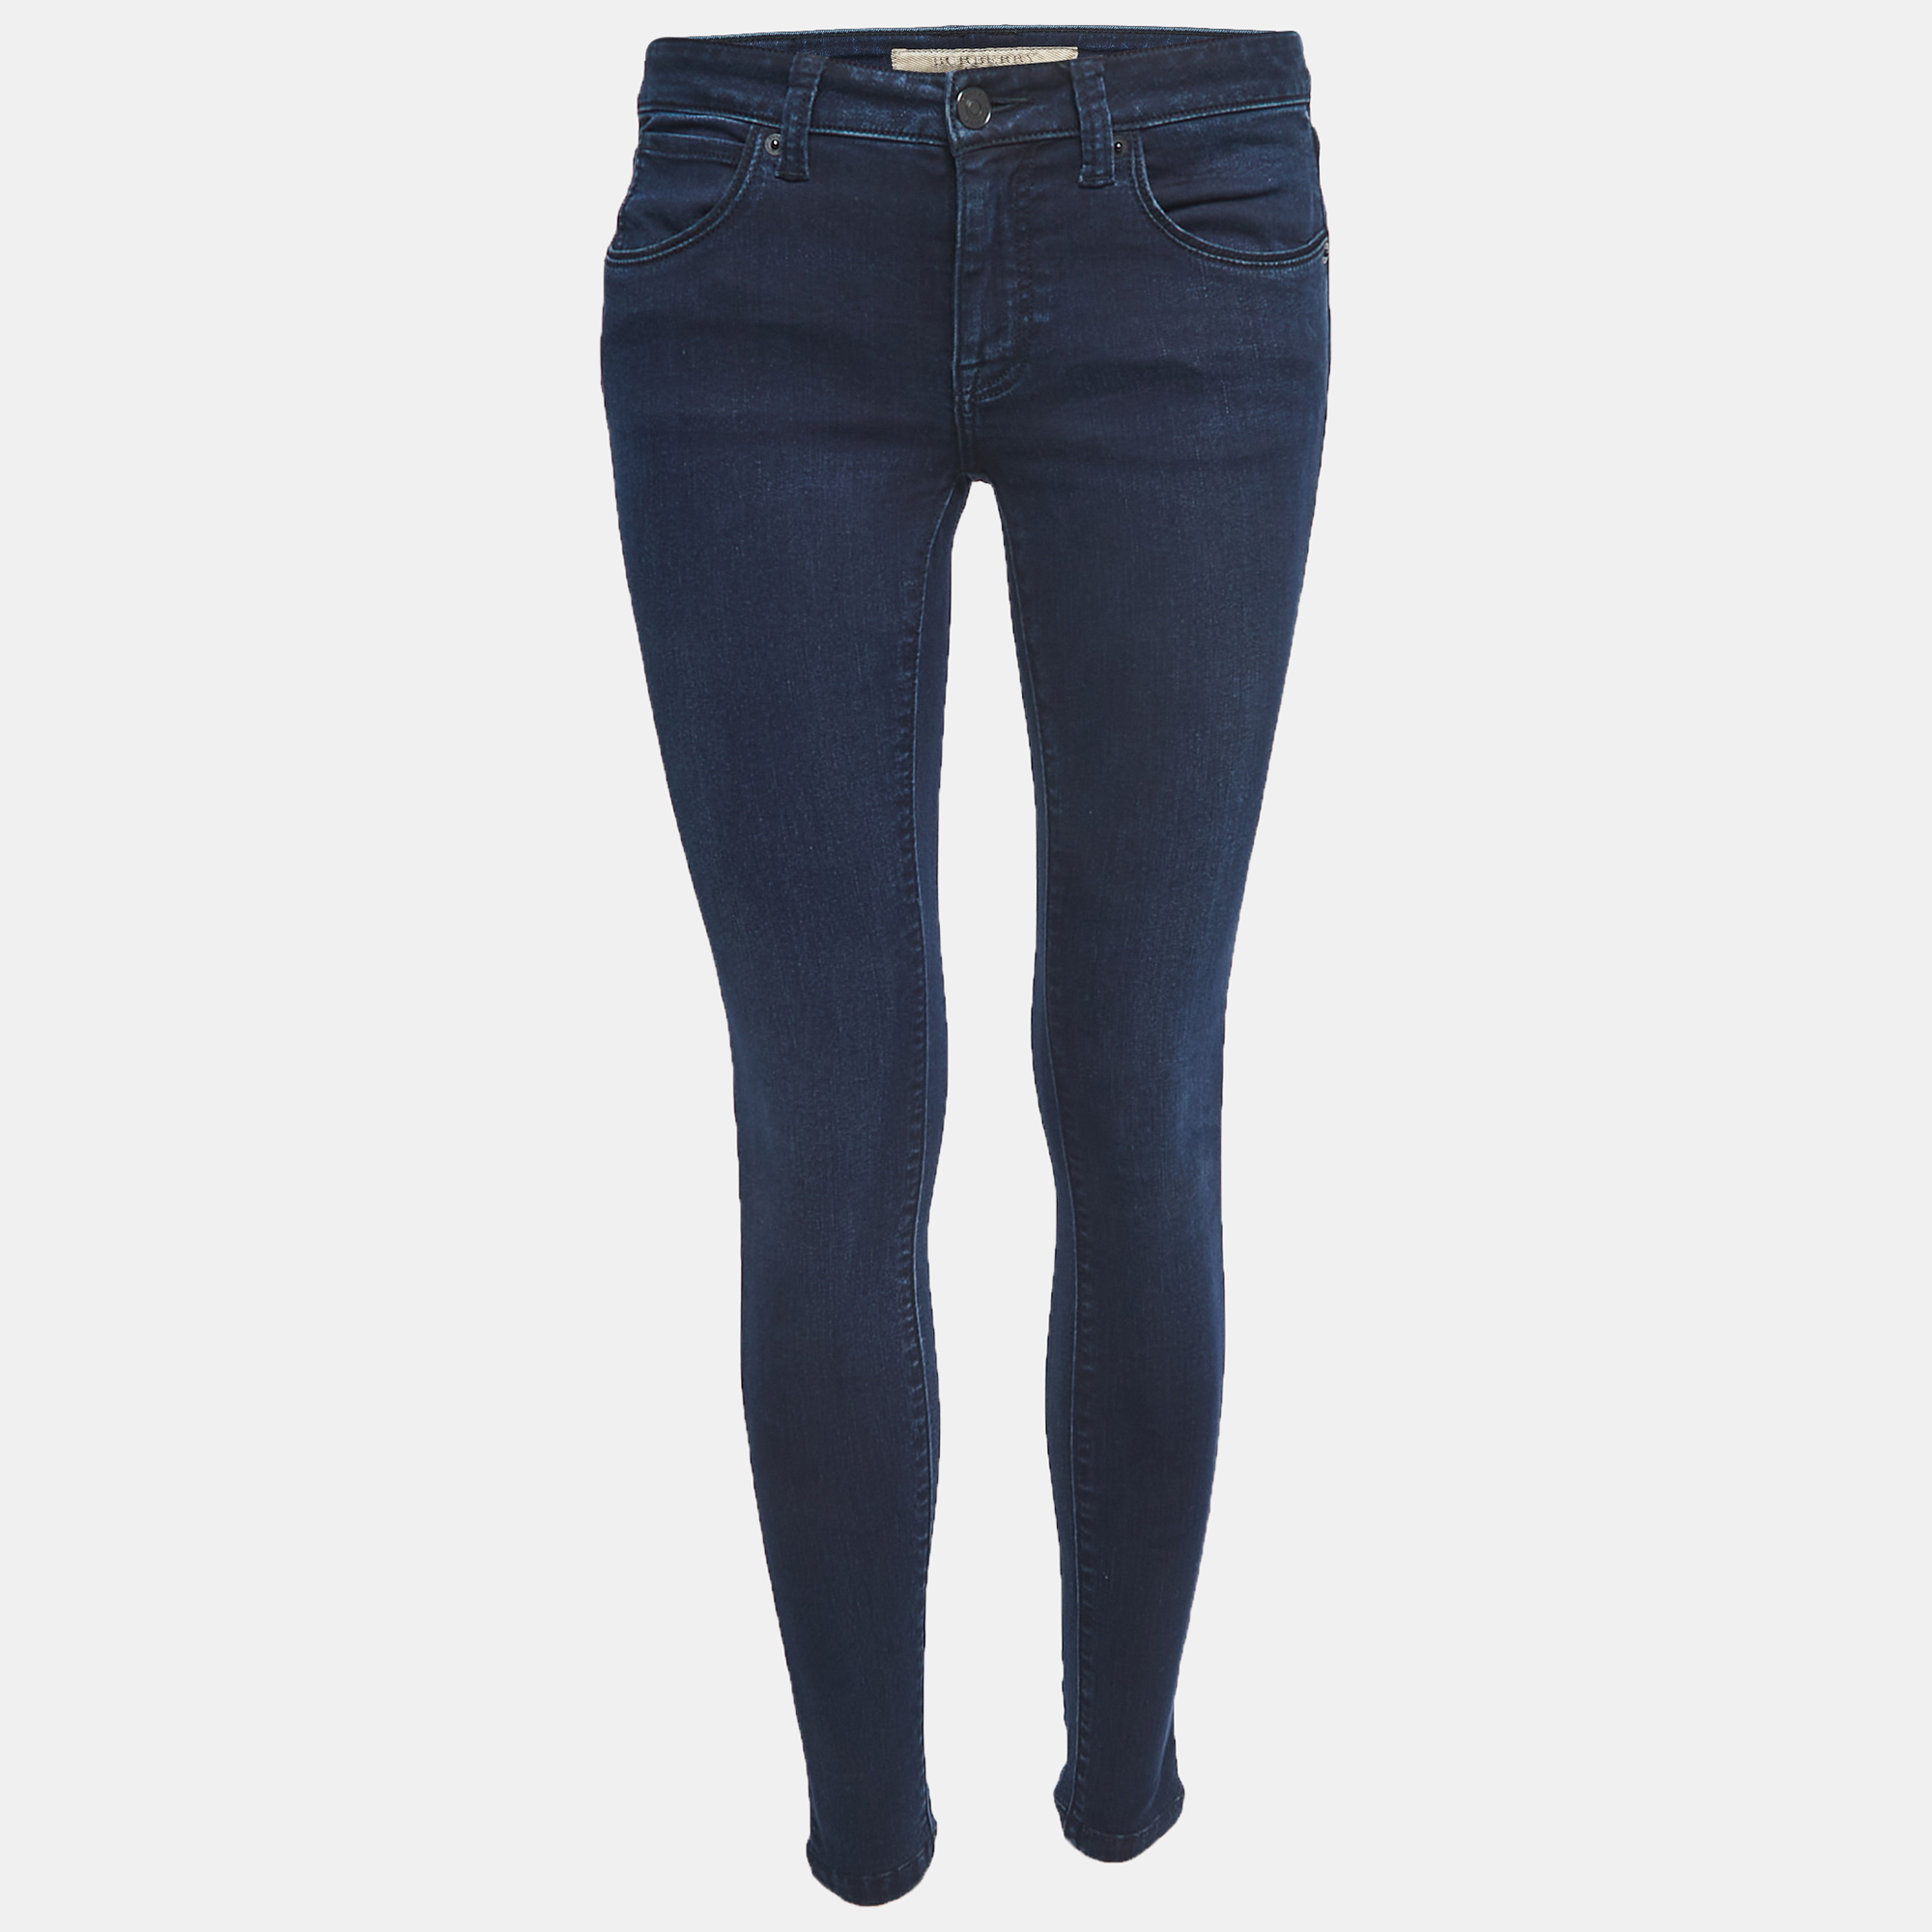 Burberry Brit Dark Blue Denim Skinny Low-Rise Jeans S Waist 27